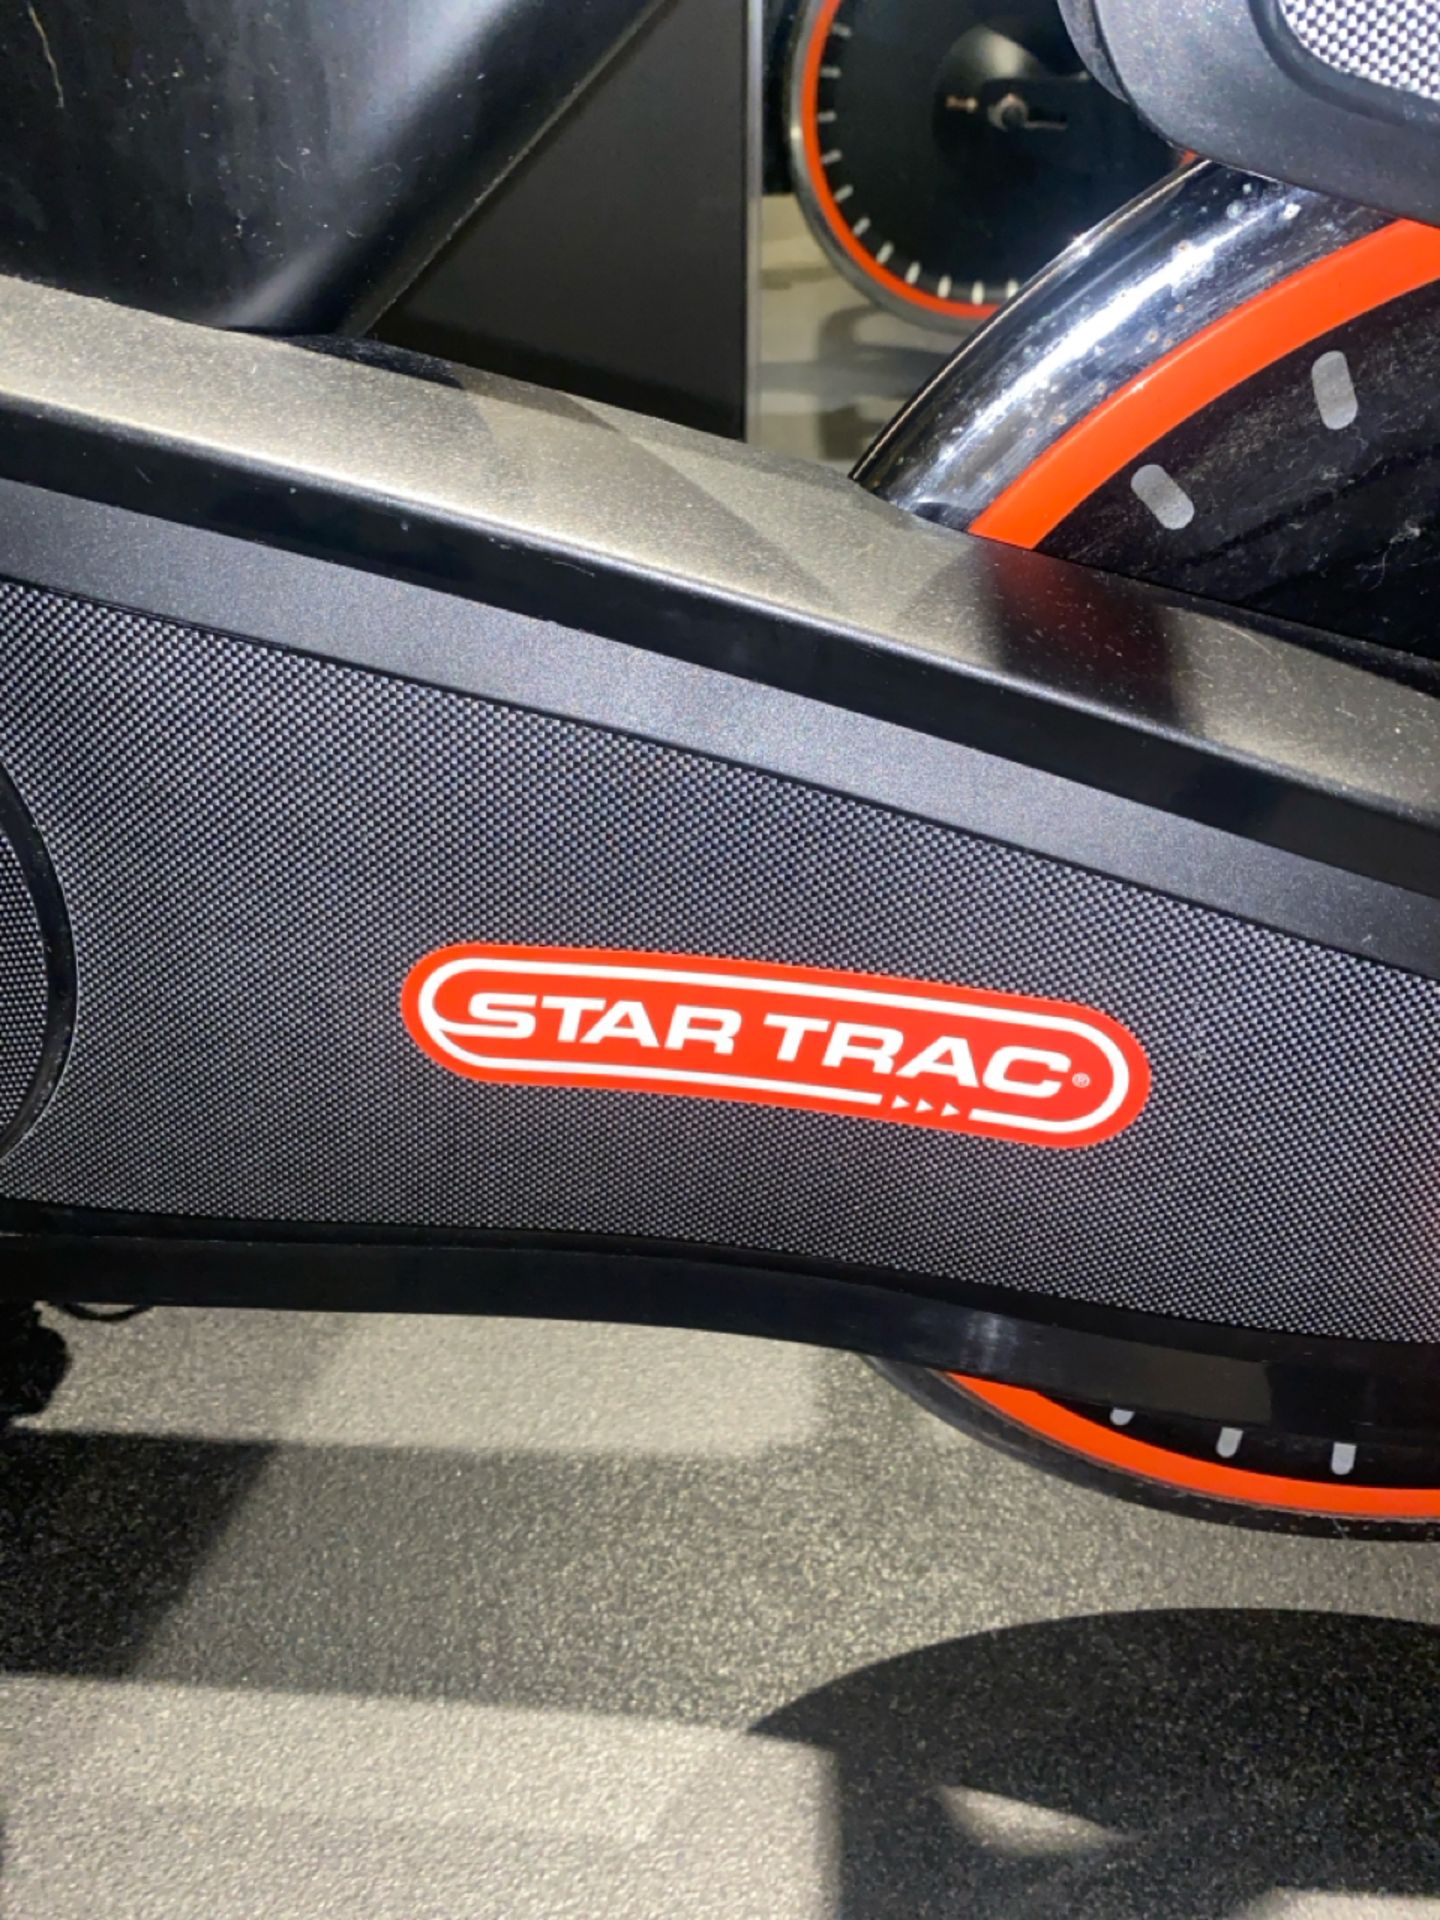 Studio 5 Star Trac Spin Bike - Image 12 of 13